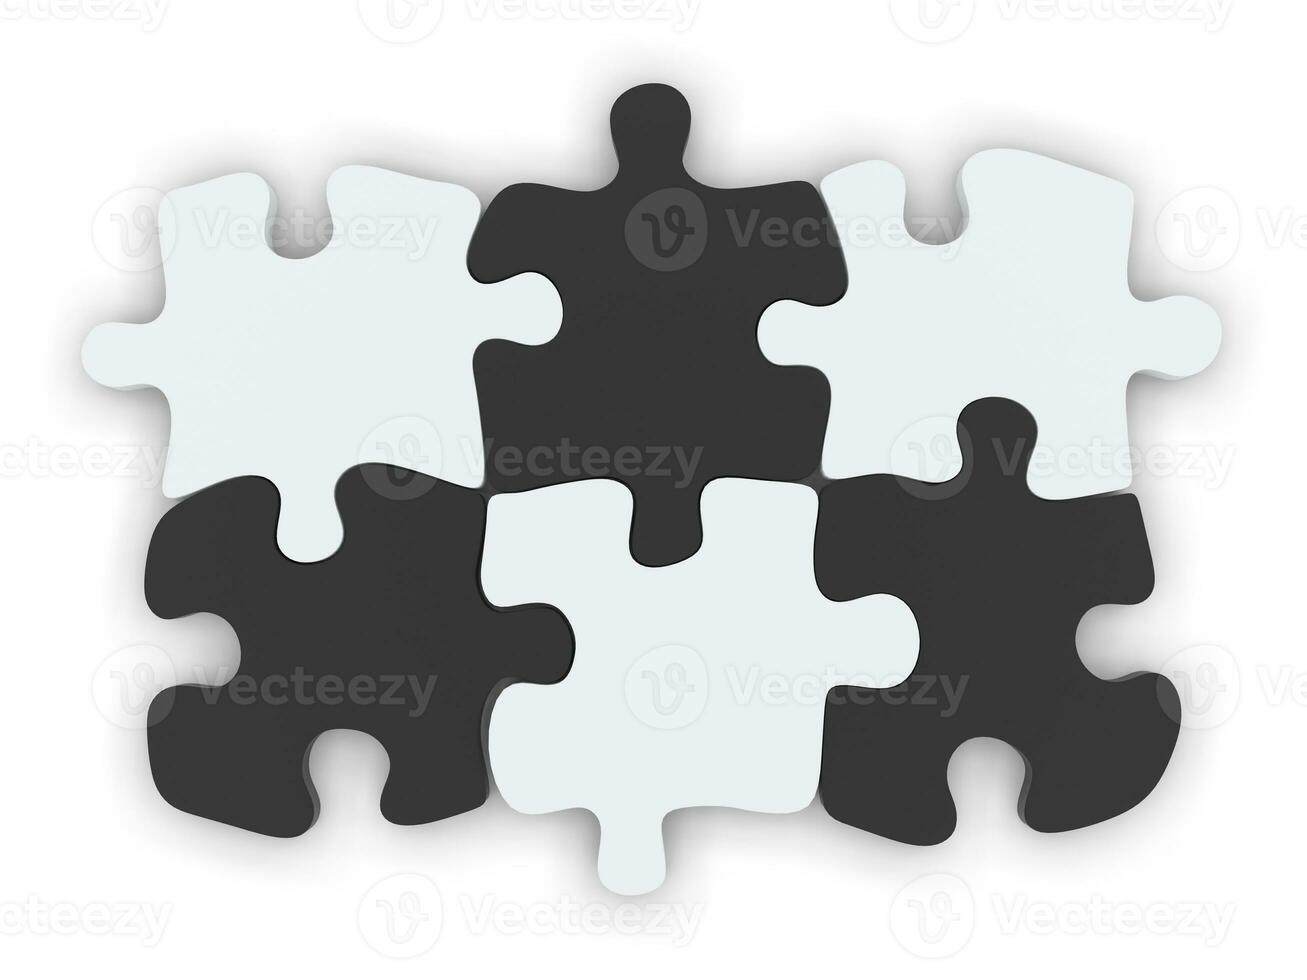 zwart en wit puzzel stukken fit samen foto